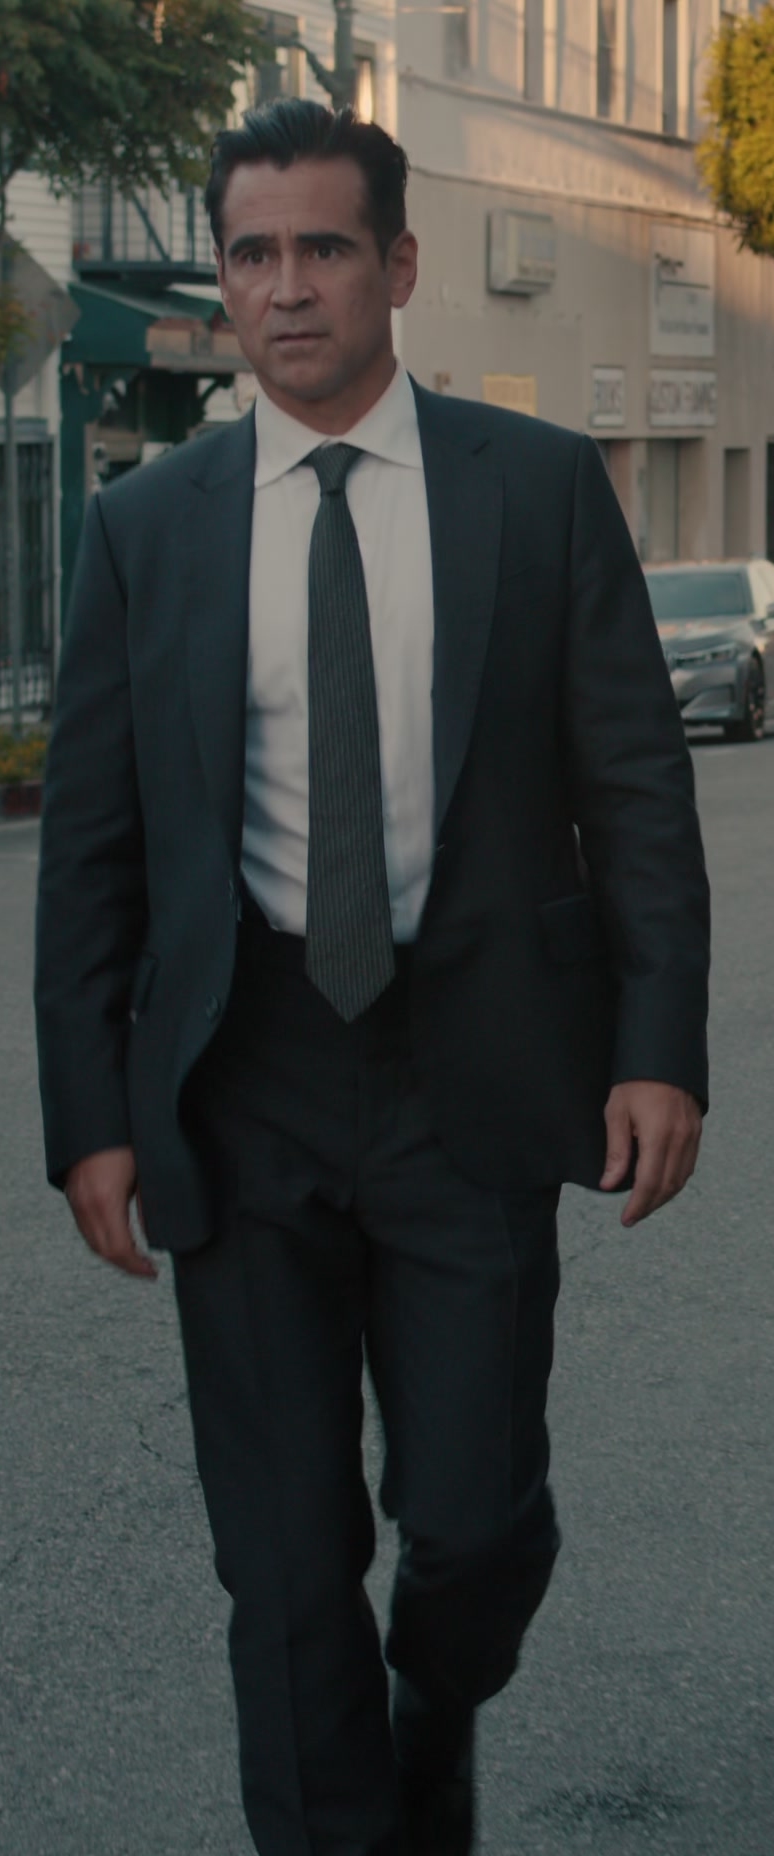 Charcoal Grey Suit of Colin Farrell as John Sugar